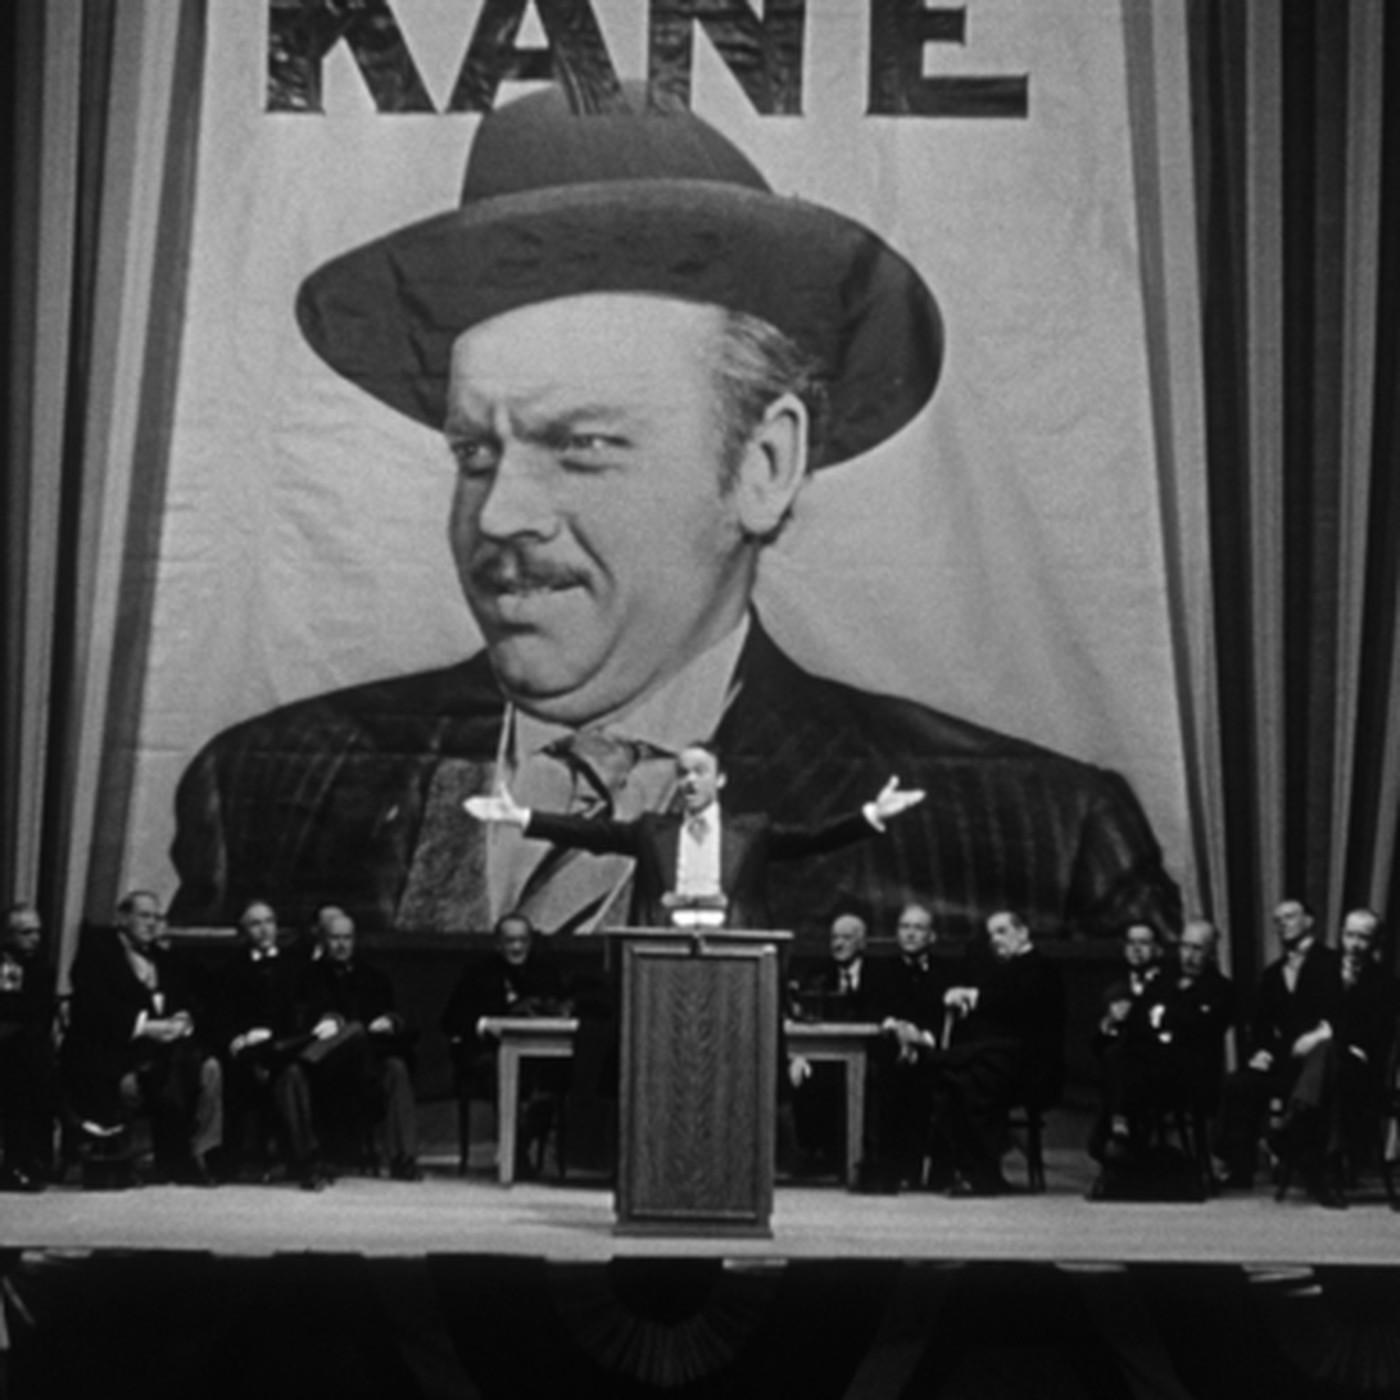 Let's watch Donald Trump talk about Citizen Kane